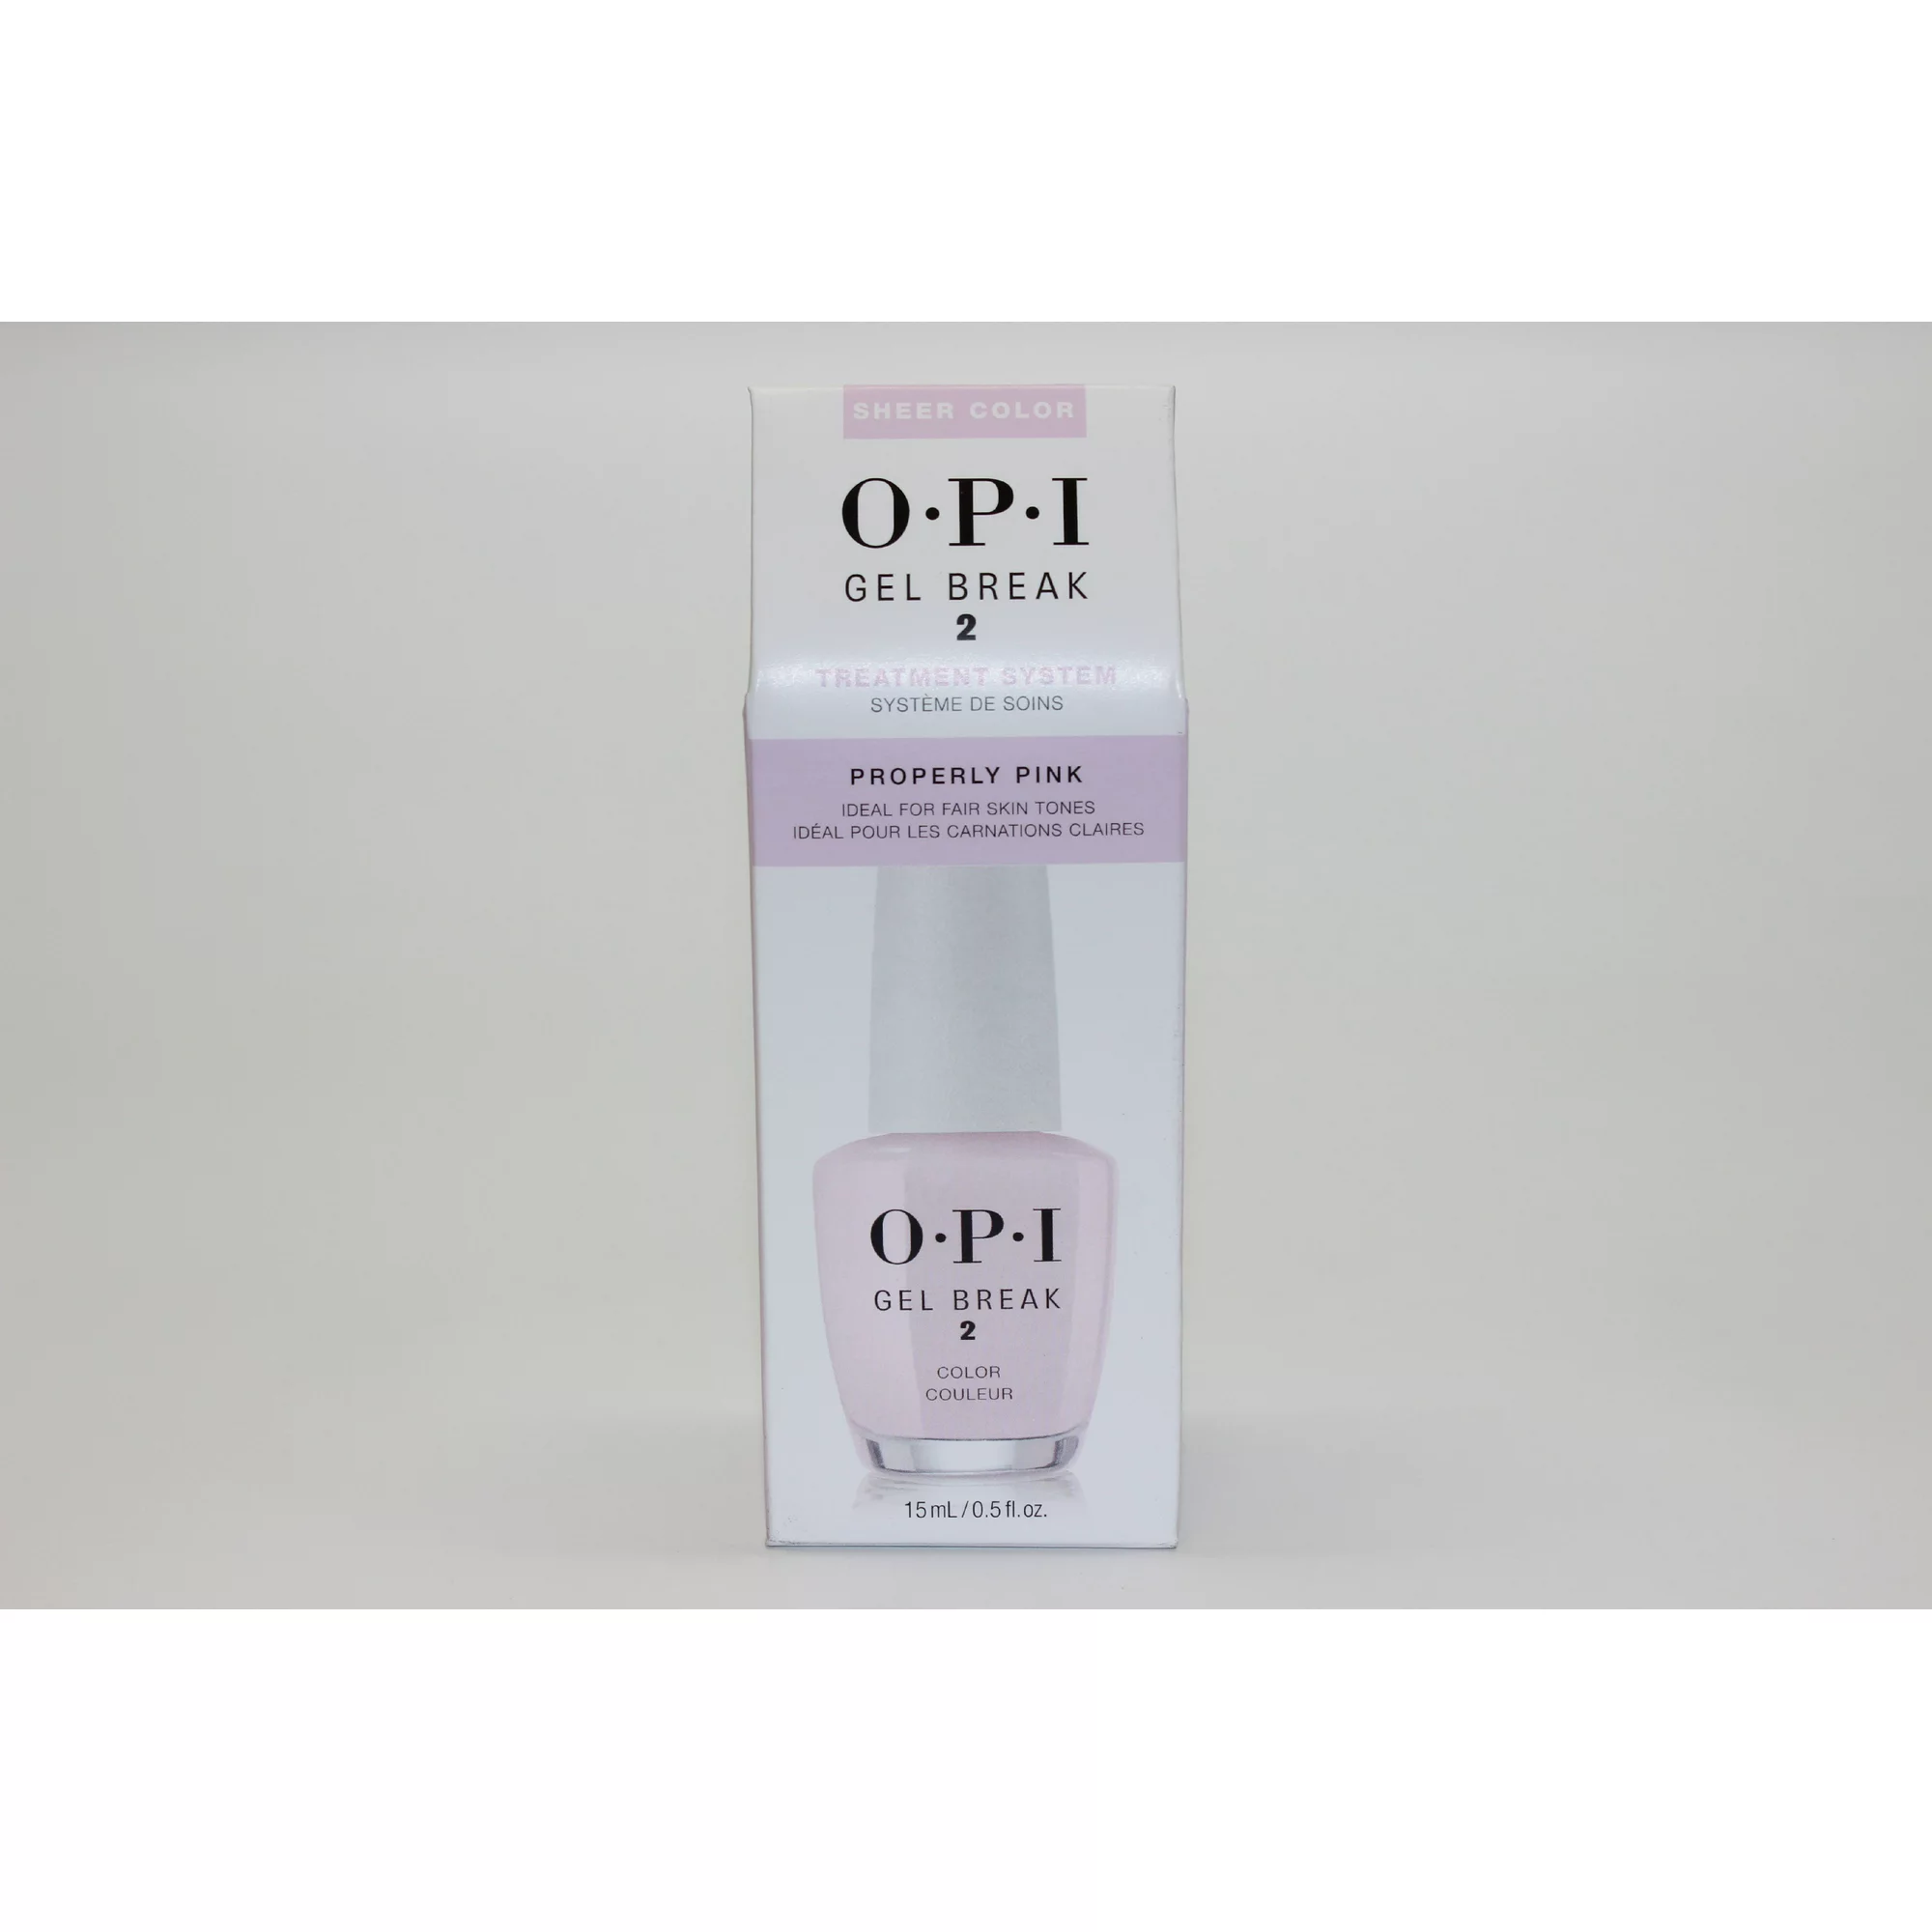 OPI Nail Treatment – Gel Break #2 – Properly Pink (Sheer Color)